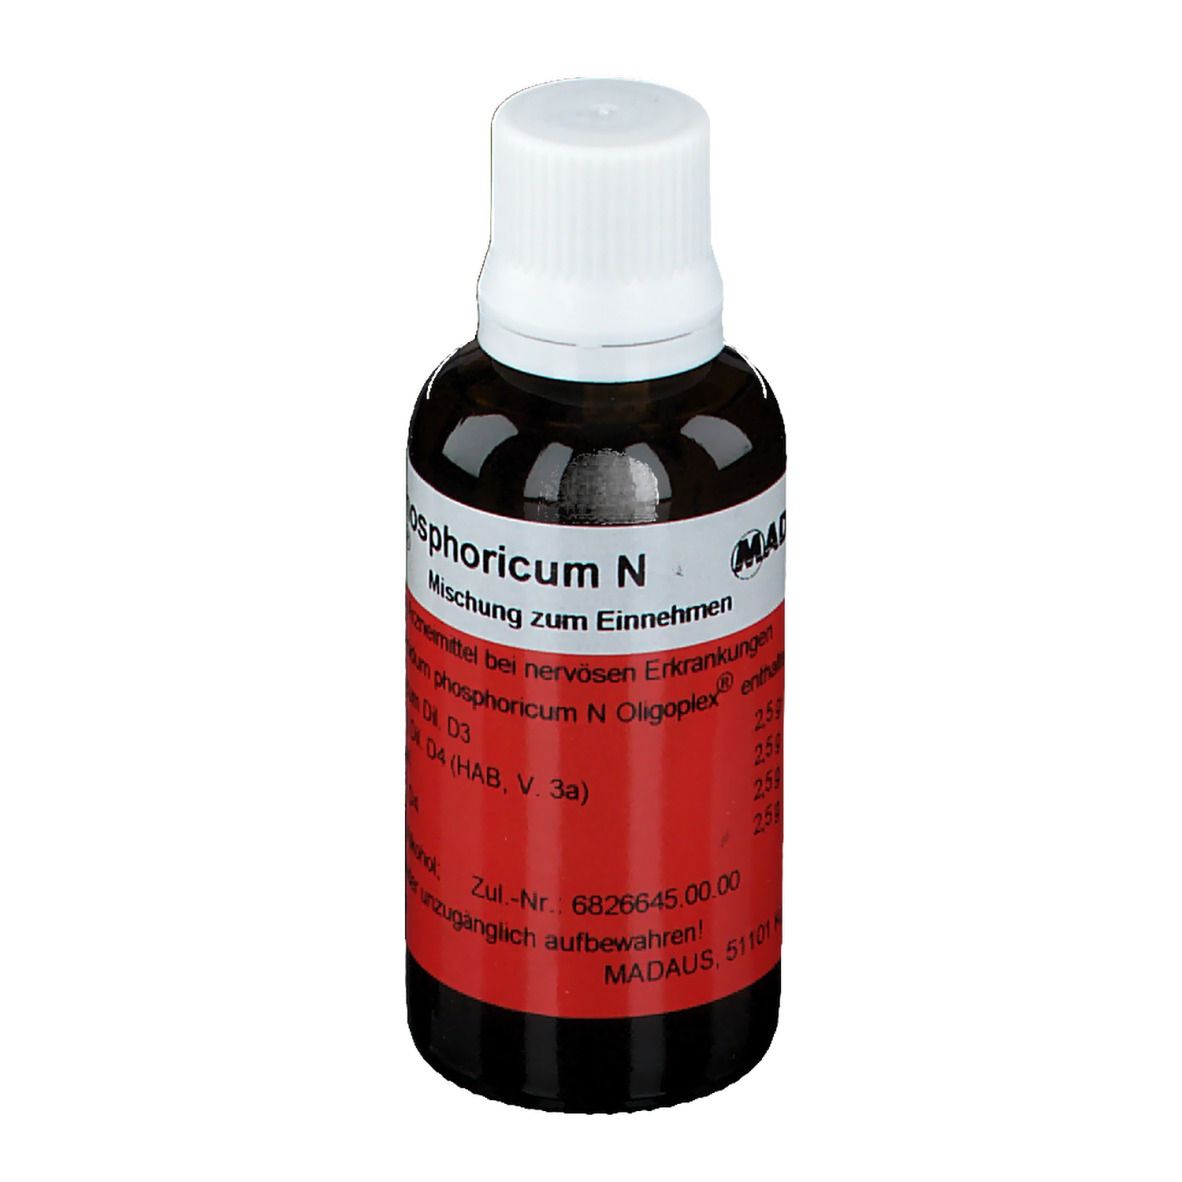 Acidum phosphoricum N Oligoplex®